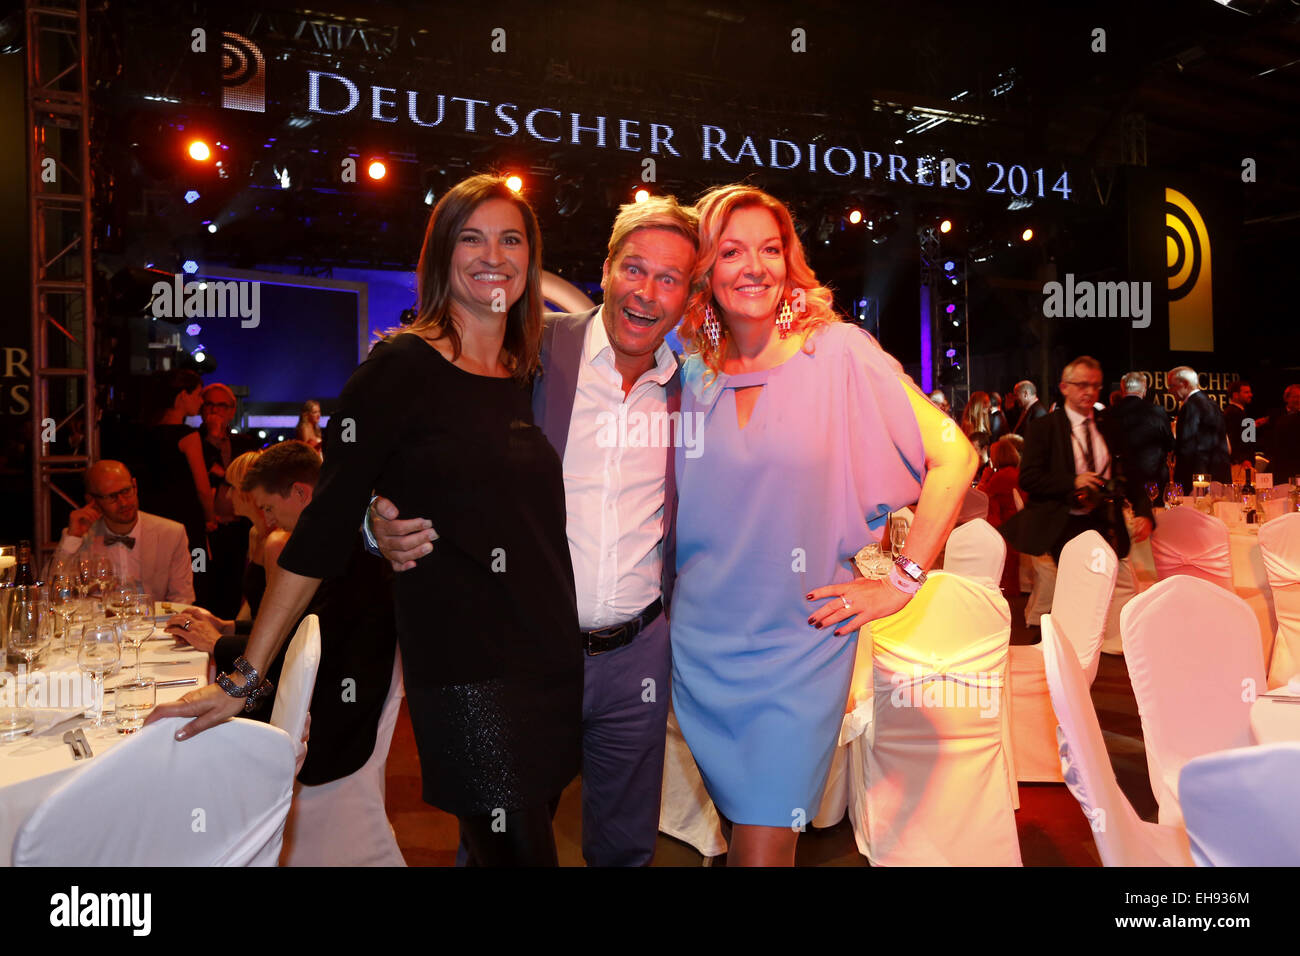 Deutscher Radiopreis 2014 (German Radio Award 2014) at Schuppen 52. Featuring: Inka Schneider,Hinnerk Baumgarten,Bettina Tietjen Where: Hamburg, Germany When: 04 Sep 2014 Stock Photo